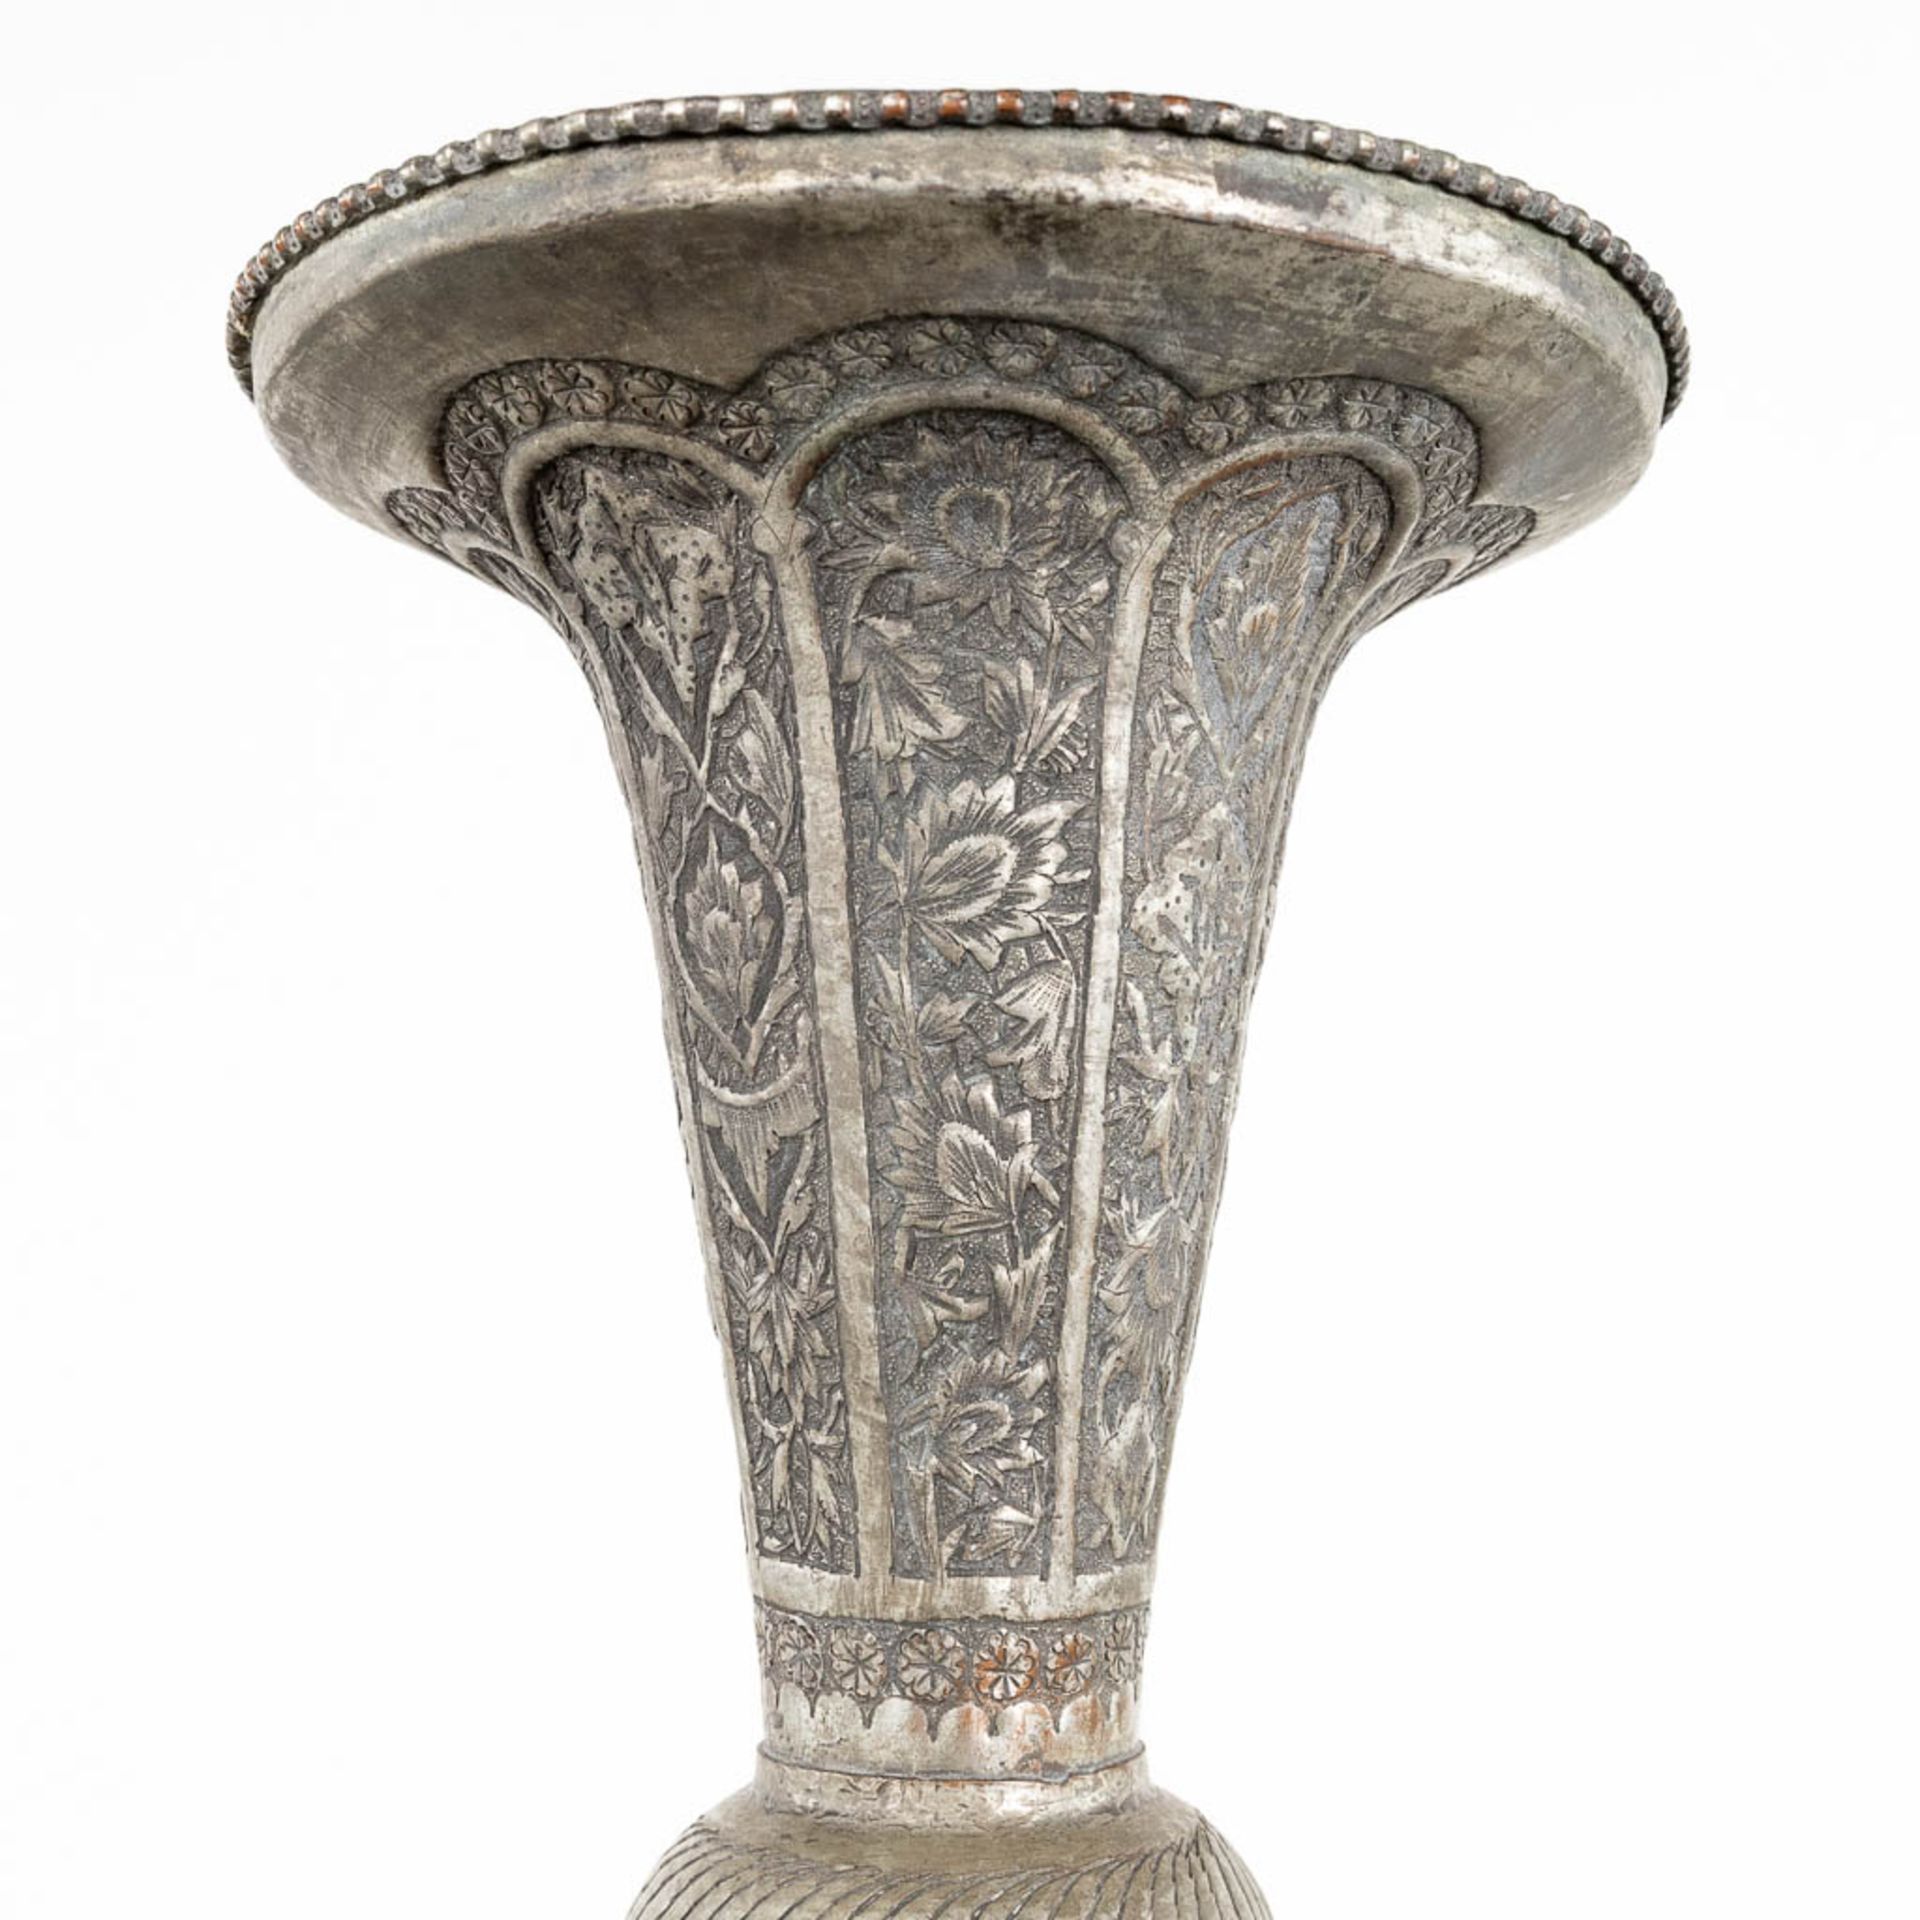 A large decorative vase, India. 19th C. (H:128 x D:32 cm) - Image 9 of 14